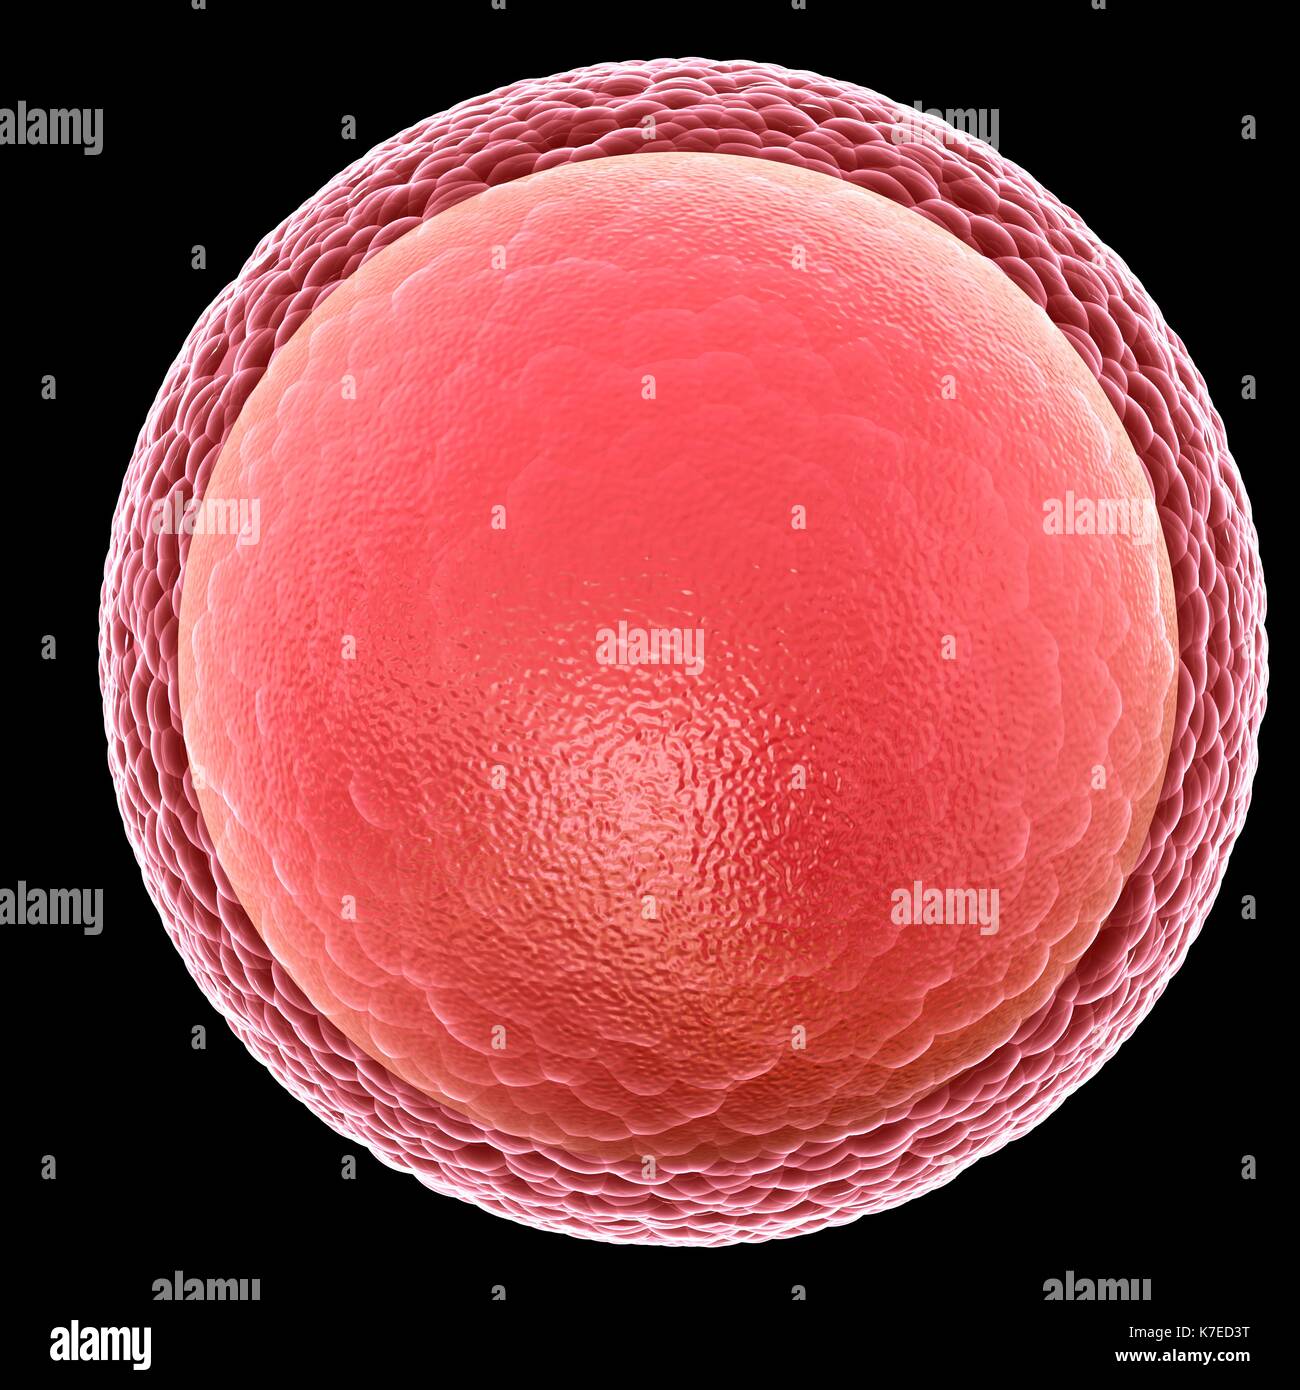 Illustration of a human egg cell (ovum). Stock Photo